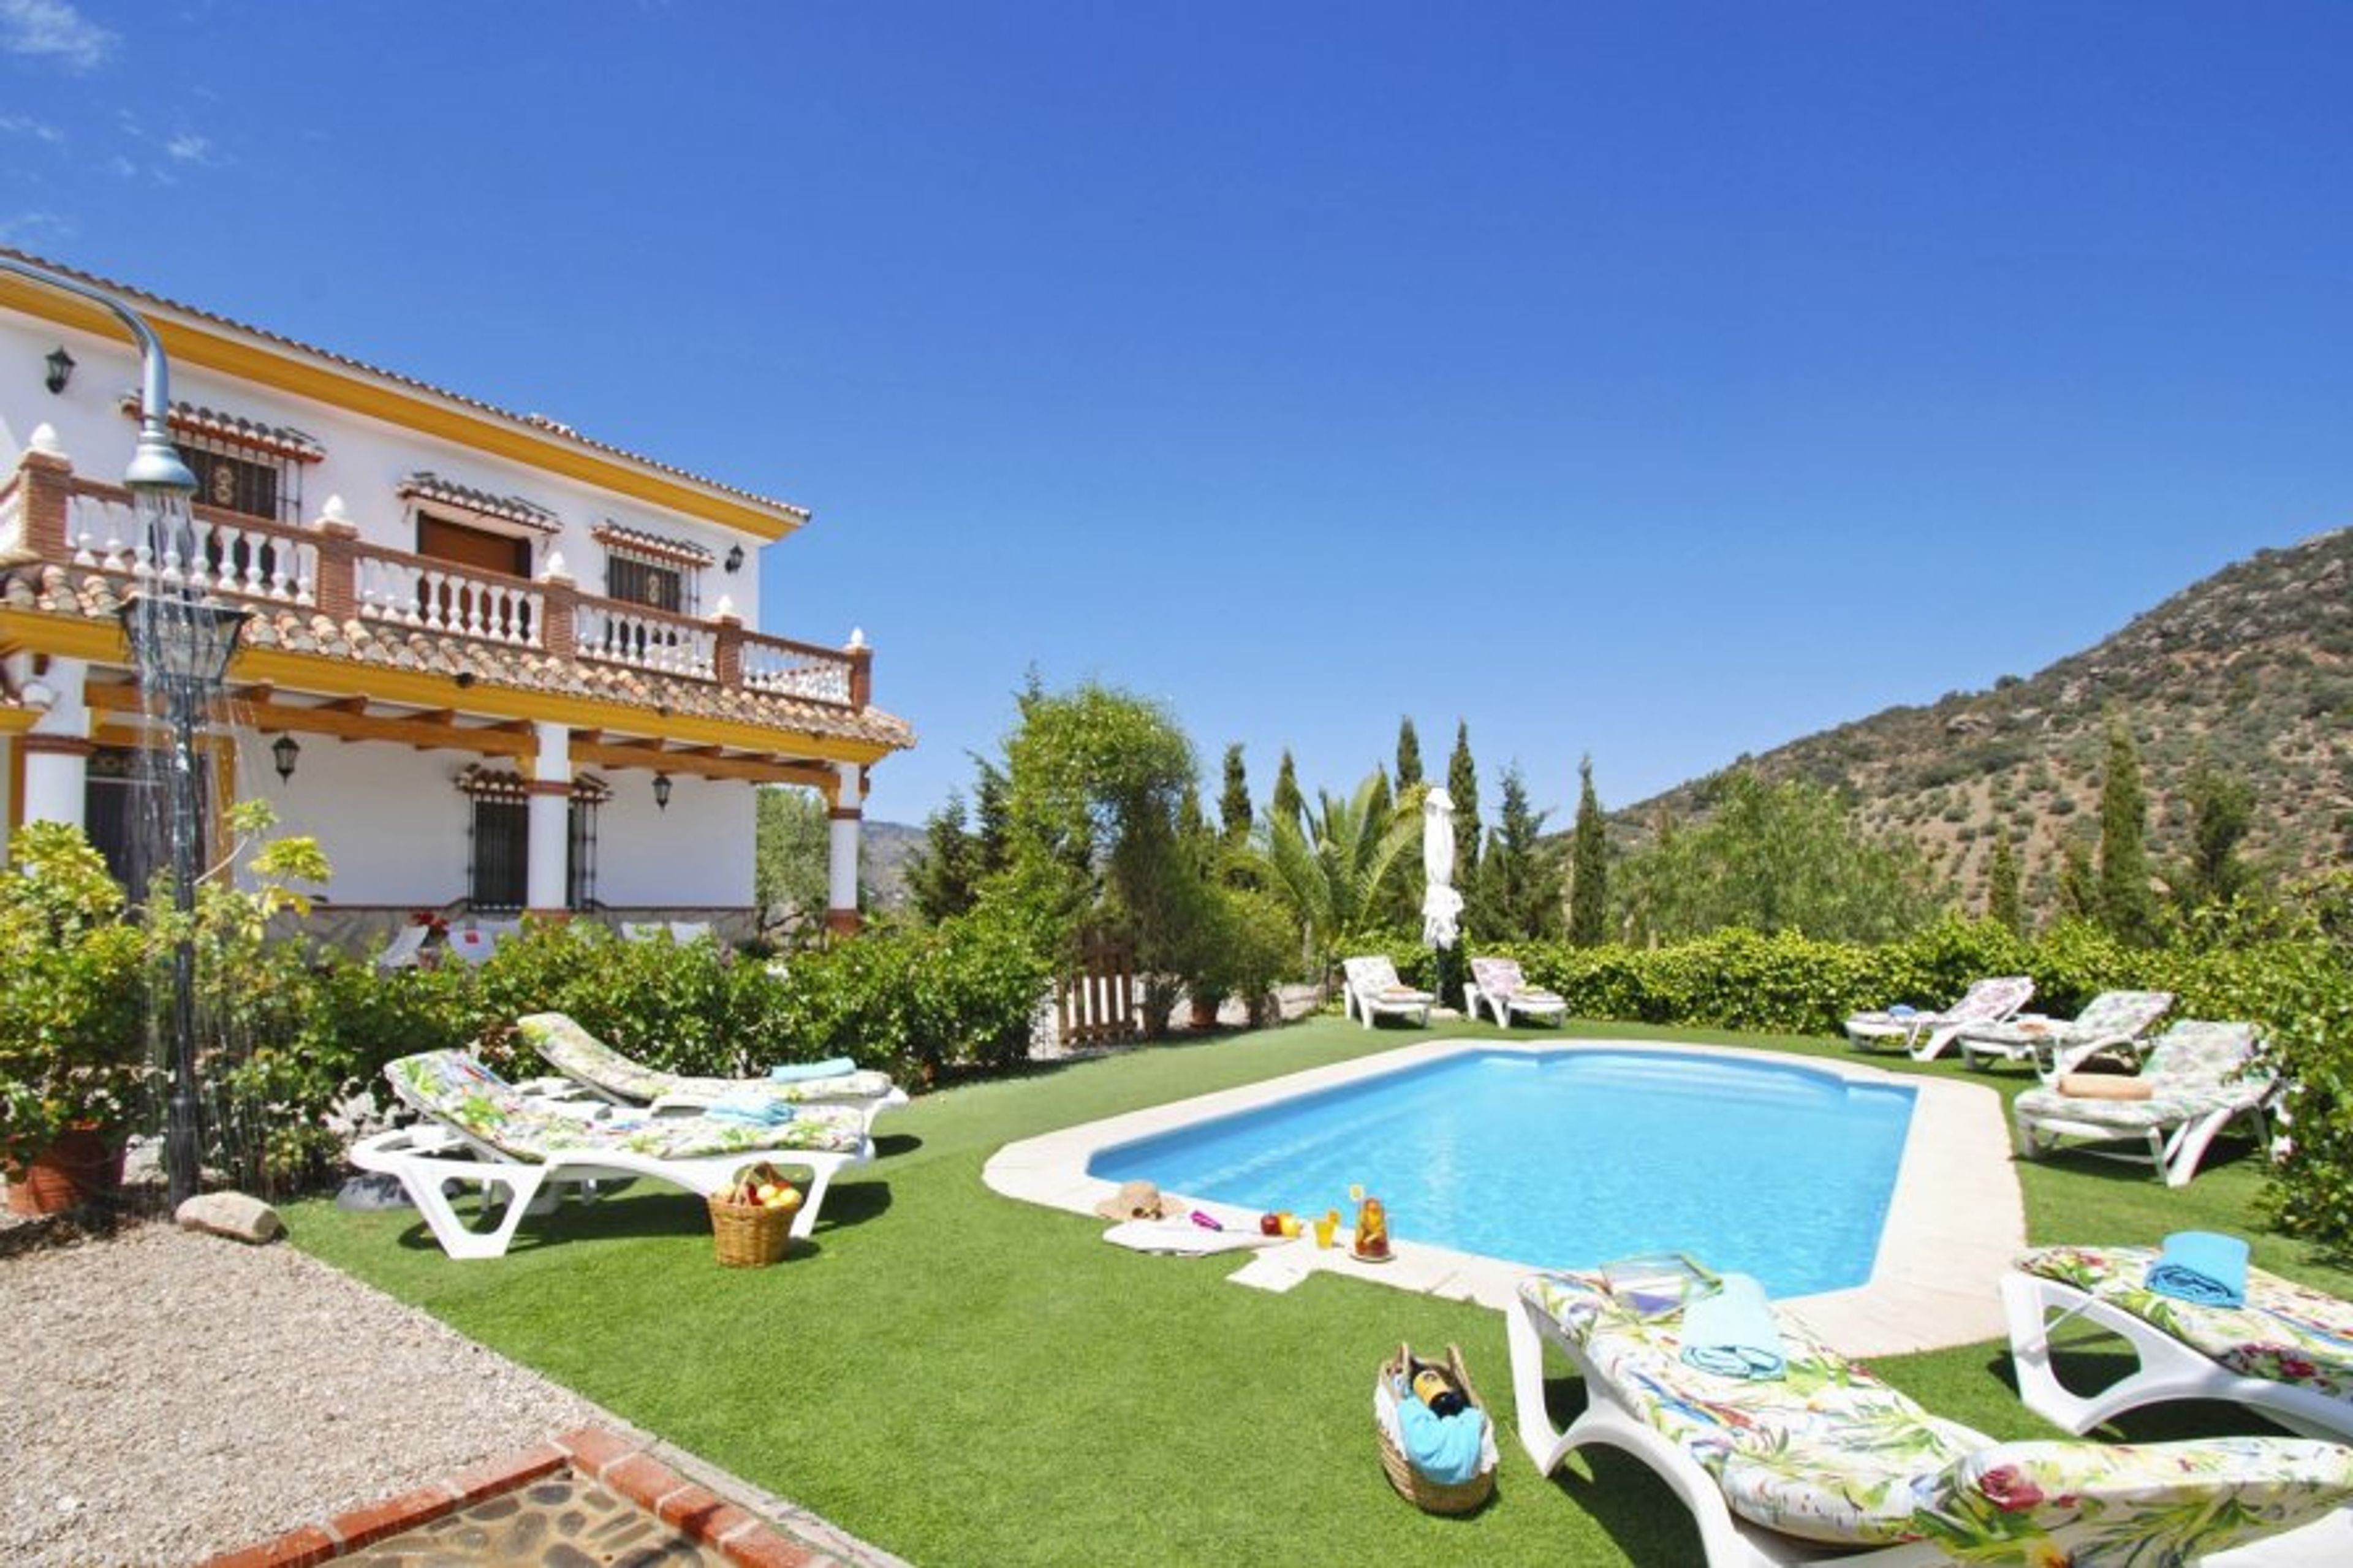 Villa Rosal offers a very spacious garden and house.